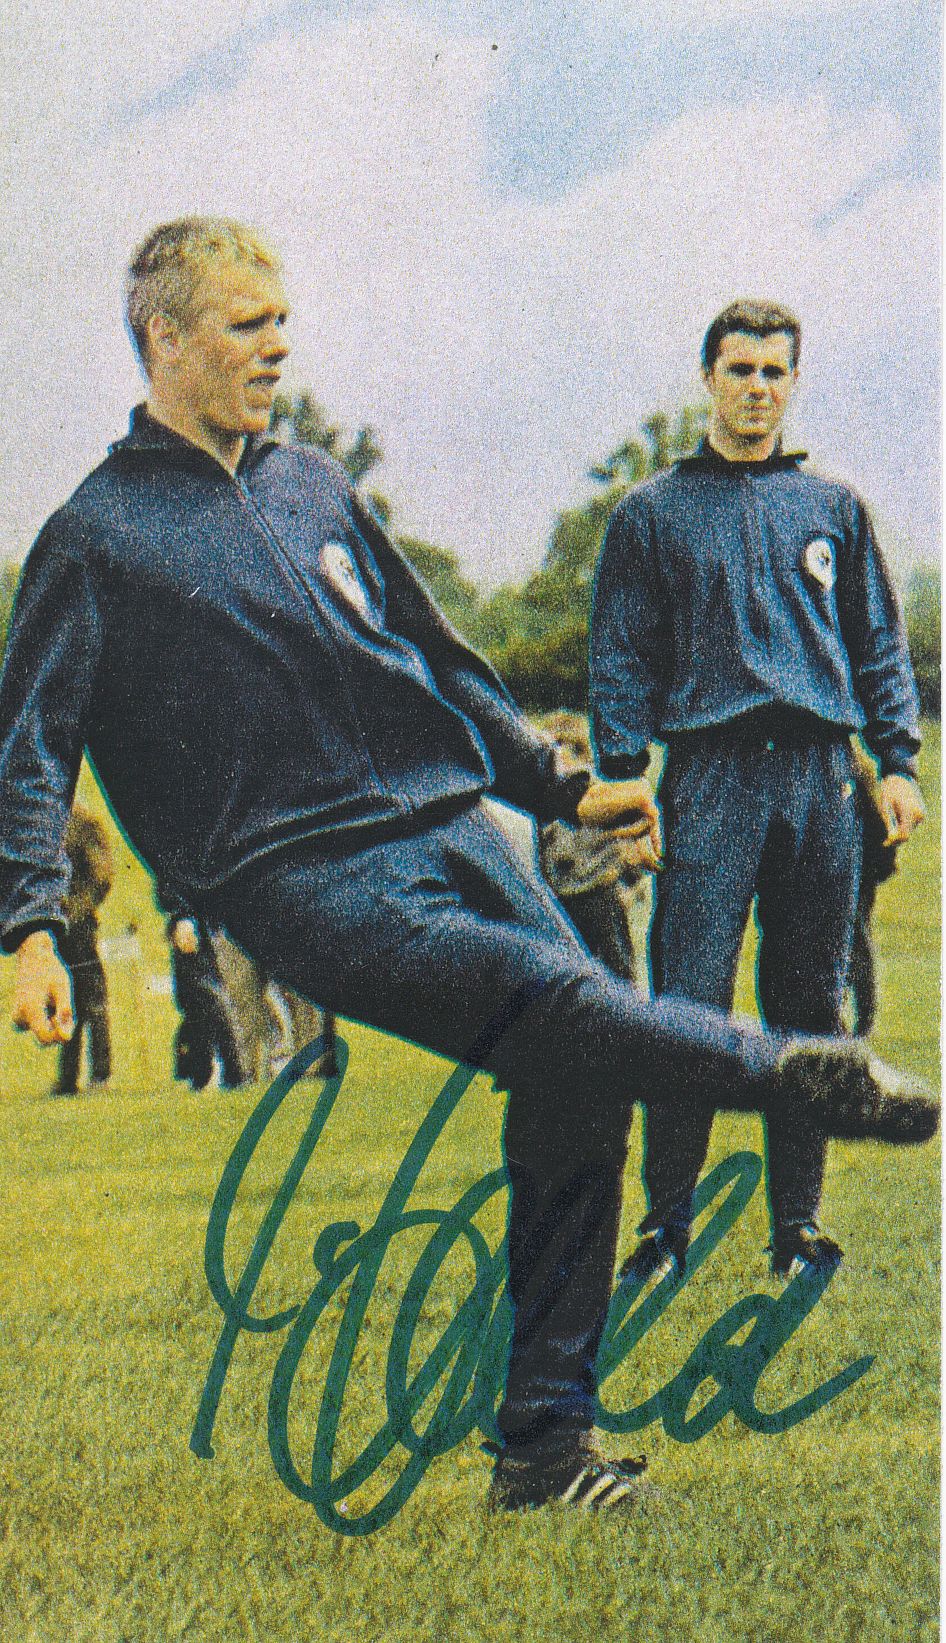 Siegfried Held Autogrammkarte DFB WM 1970 Original Signiert 